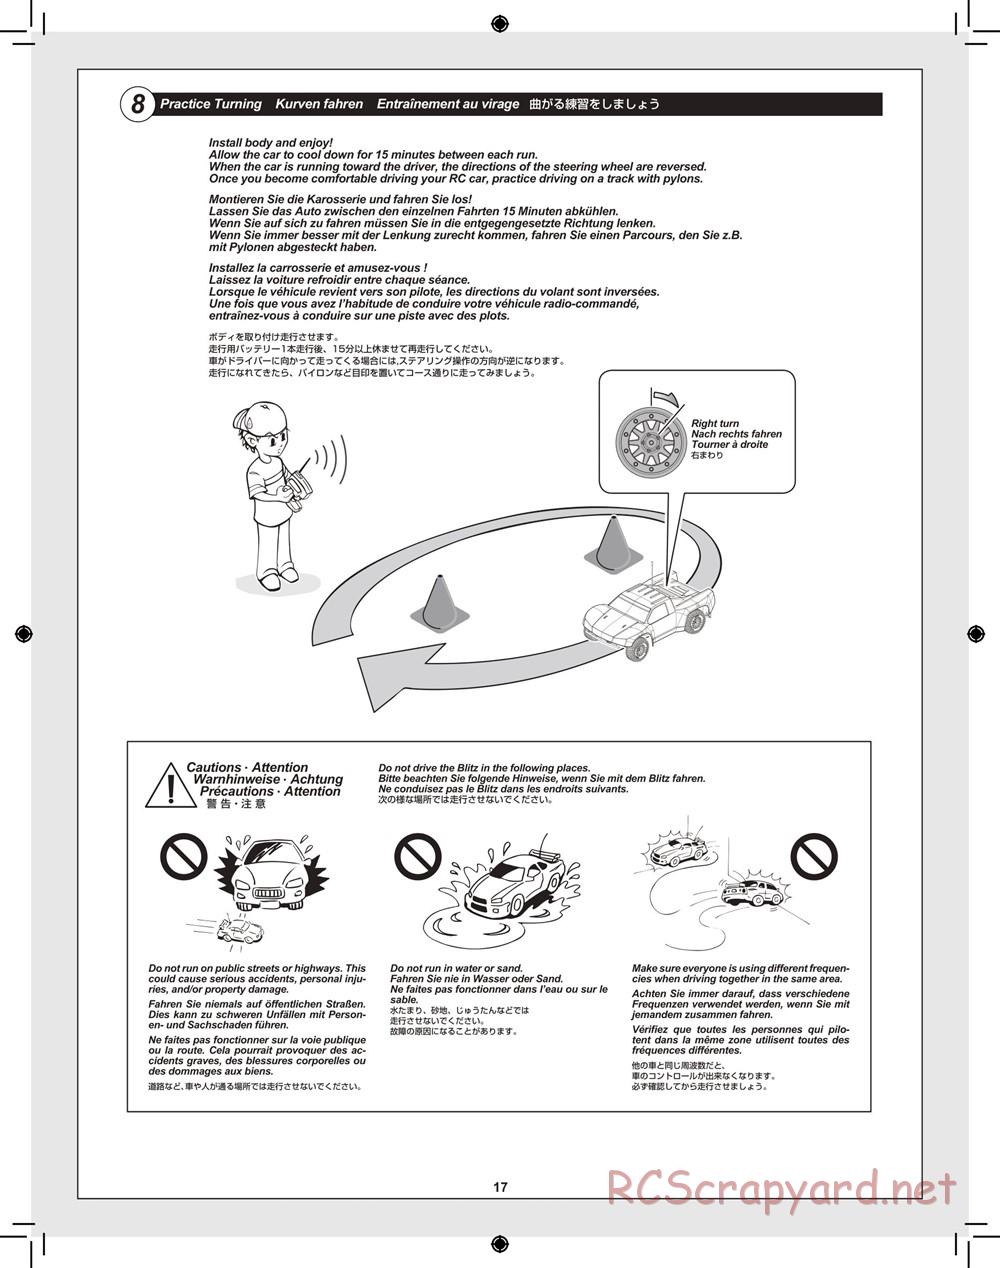 HPI - Blitz Waterproof - Manual - Page 17